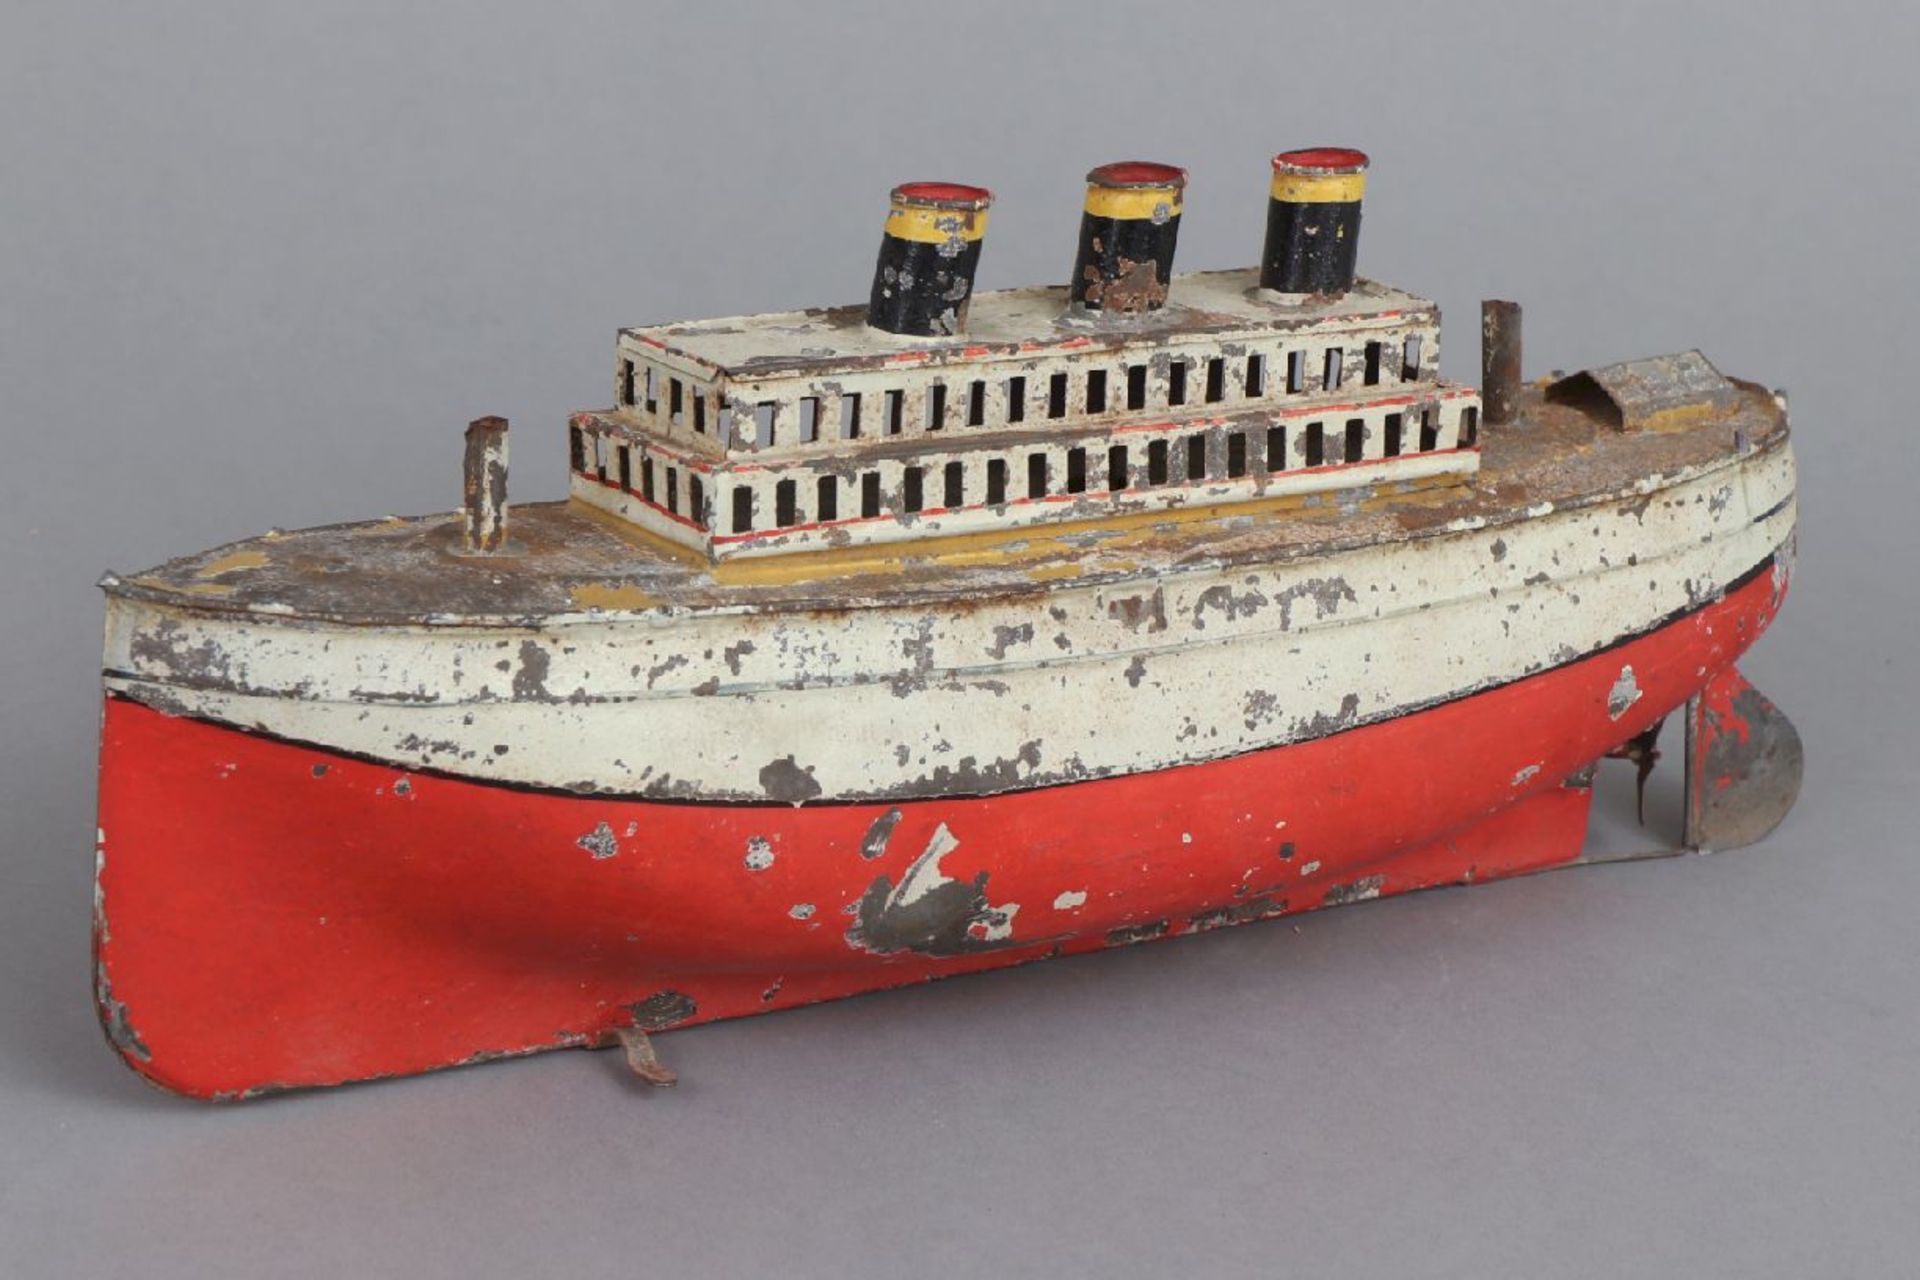 Frühes Blechmodell eines Passagier-Dampfschiffesunbekannter Hersteller, um 1900/20, farbig